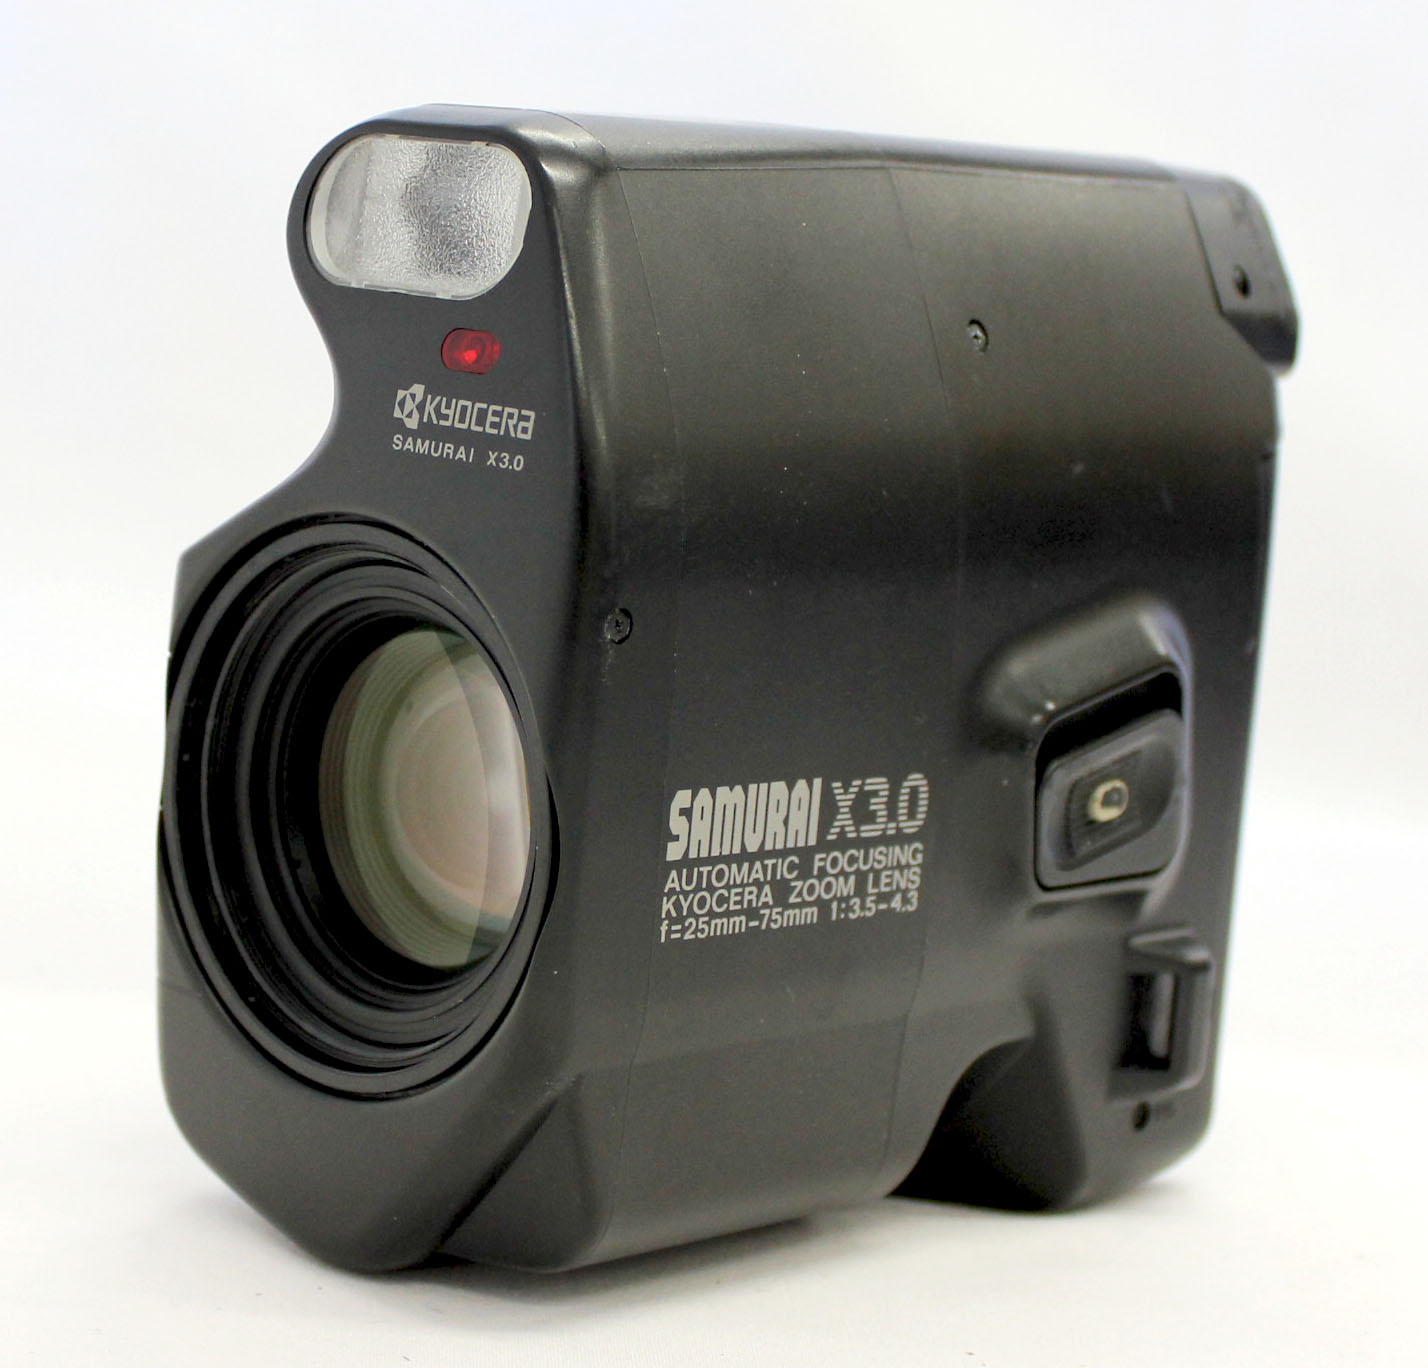 Japan Used Camera Shop | [Excellent++++] Kyocera Samurai X3.0 35mm Half Frame Camera from Japan